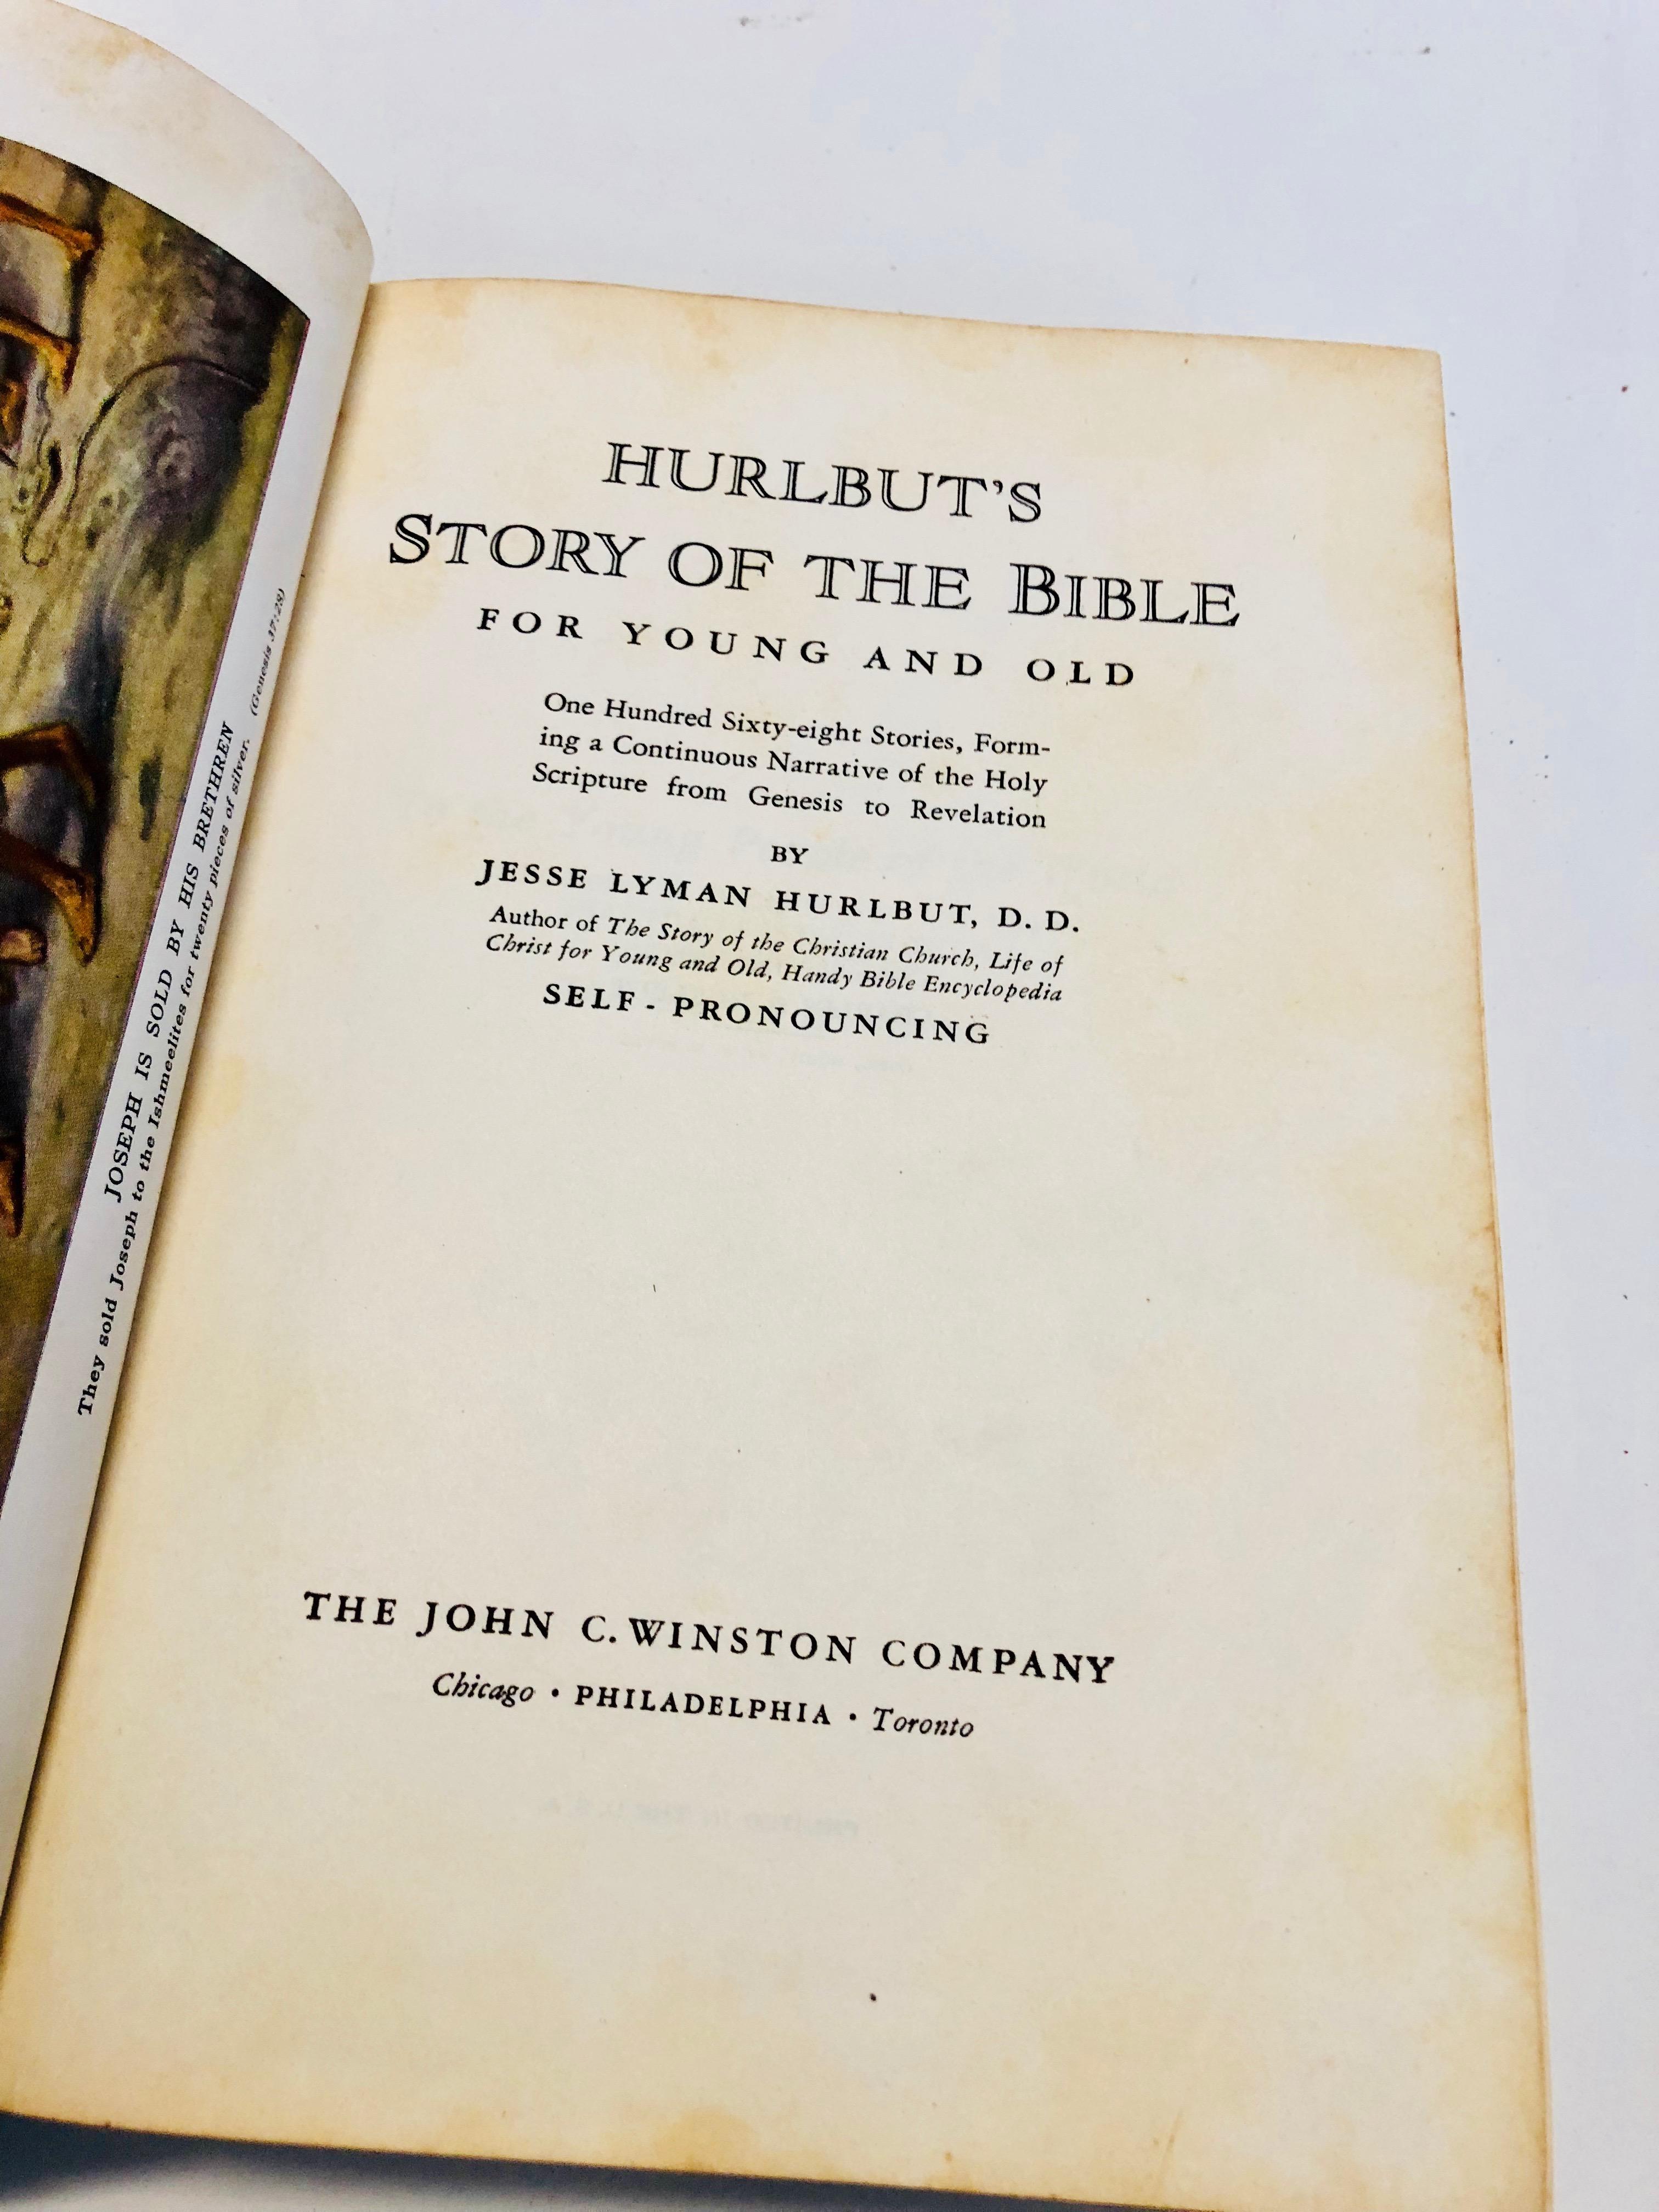 Hurlbut's Story of the Bible by Jesse Lyman Hurlbut (1932) Color Illustrations